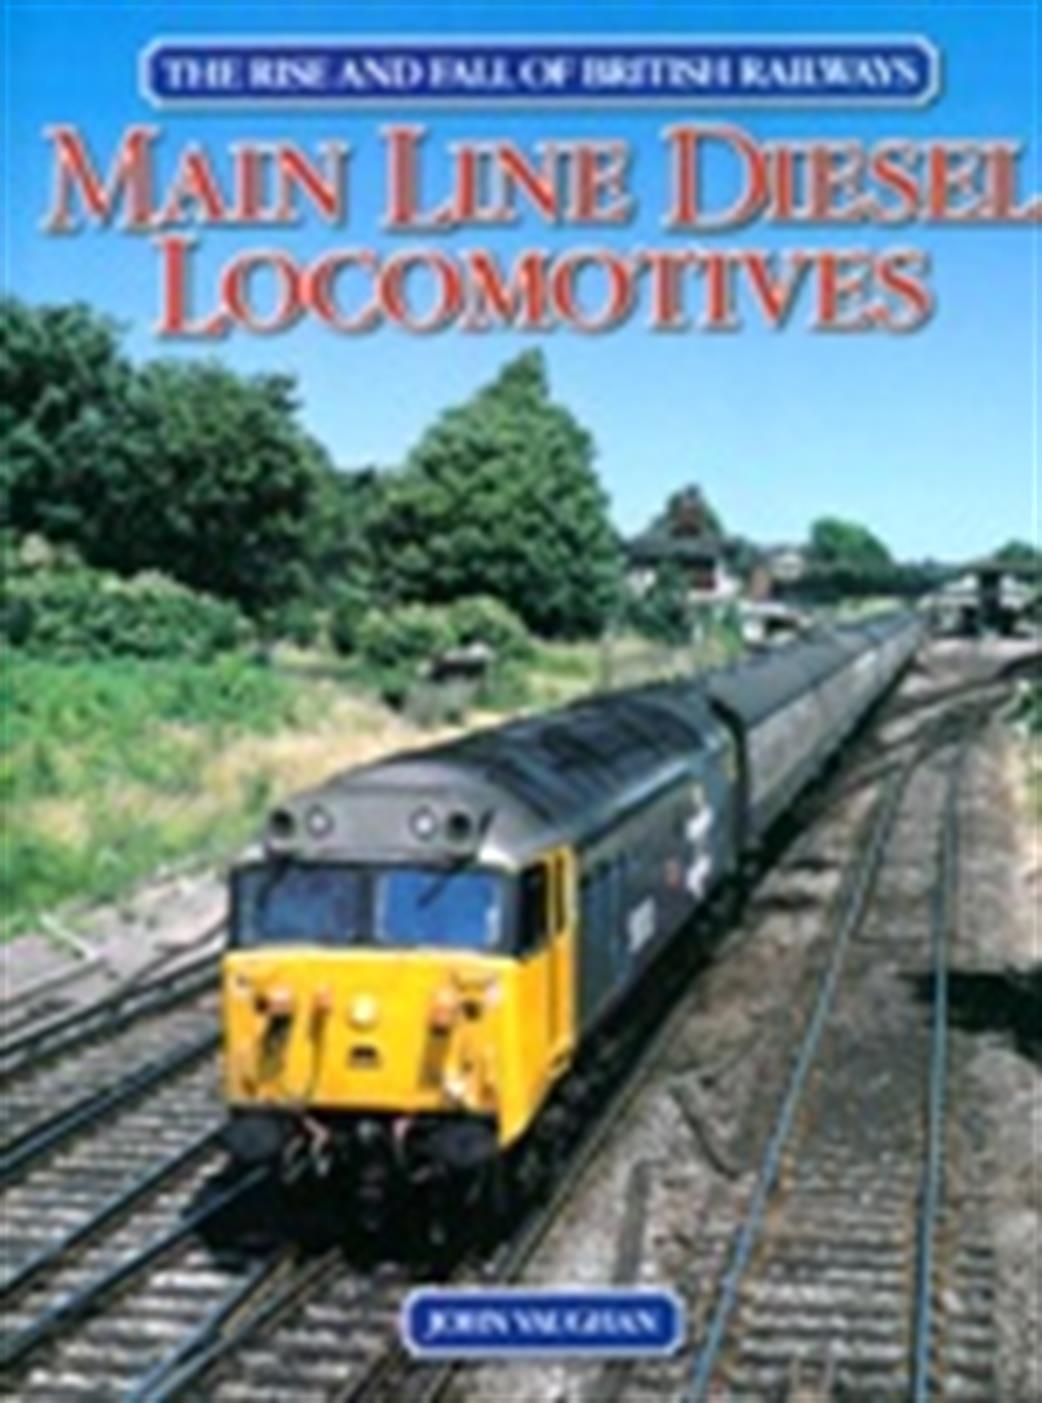 Haynes  9781844256907 Main Line Diesel Locomotives The Rise and Fall of British Railways by John Vaughan